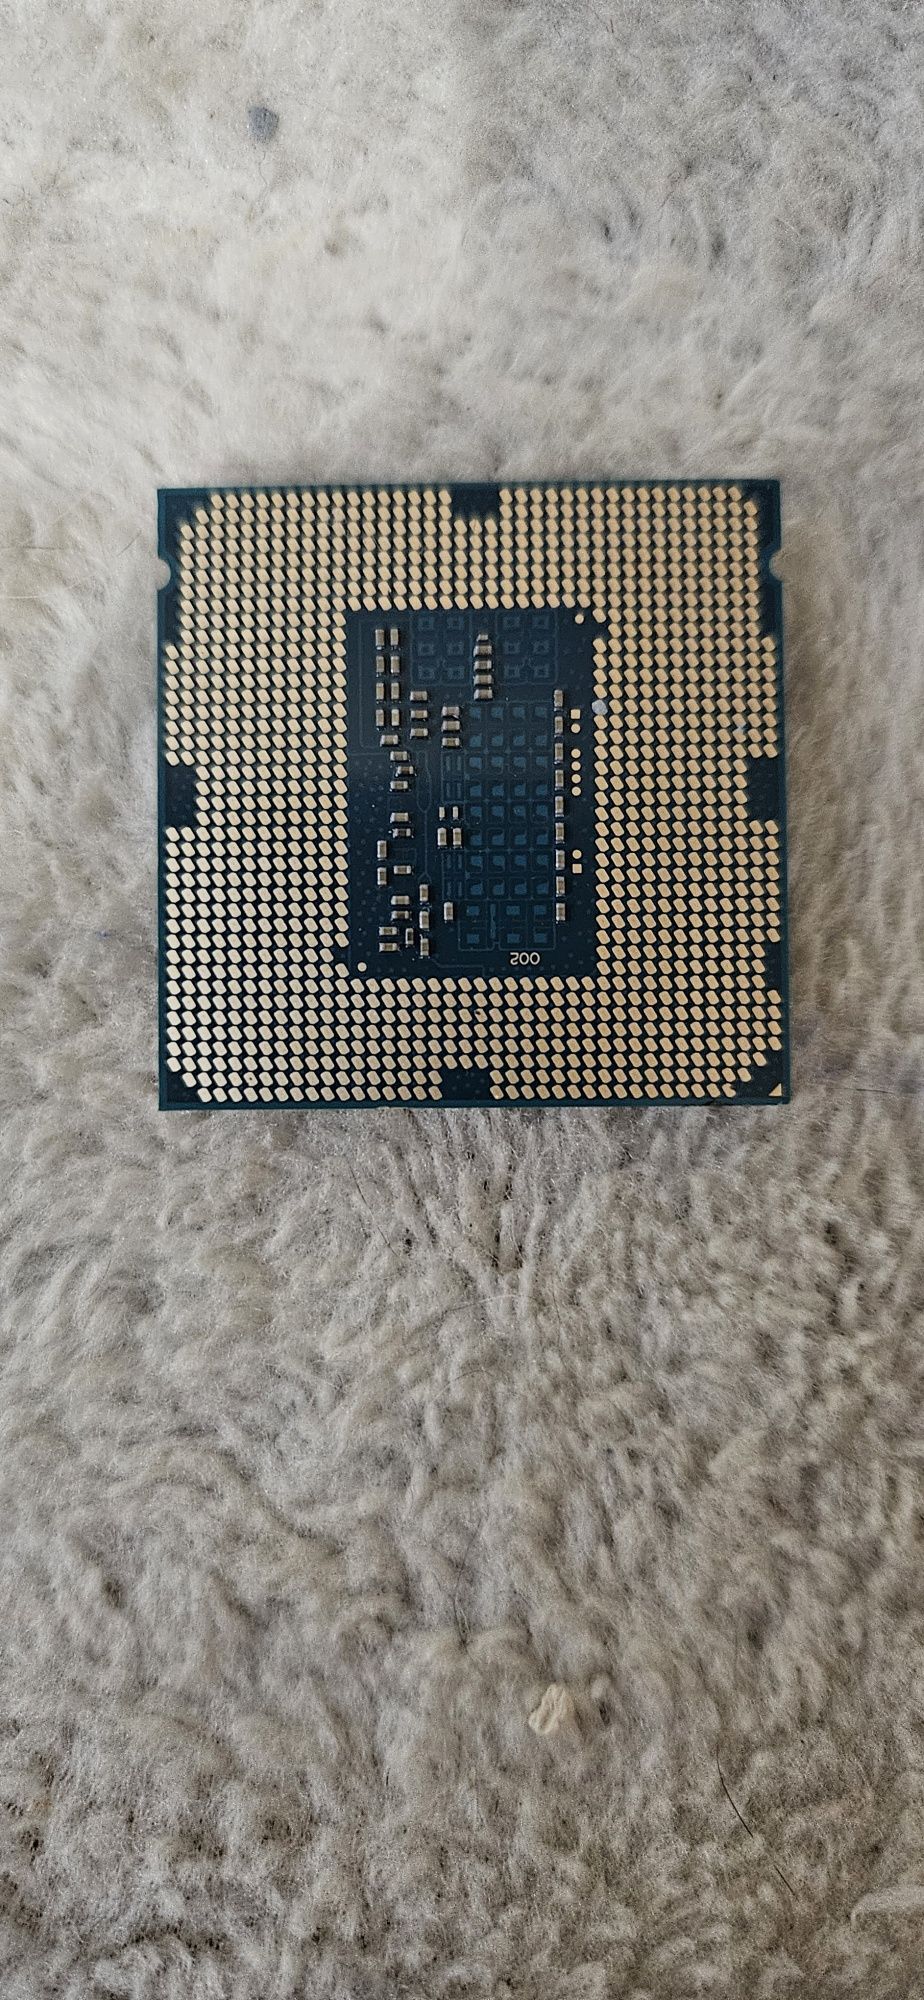 Intel Core i5 4570s